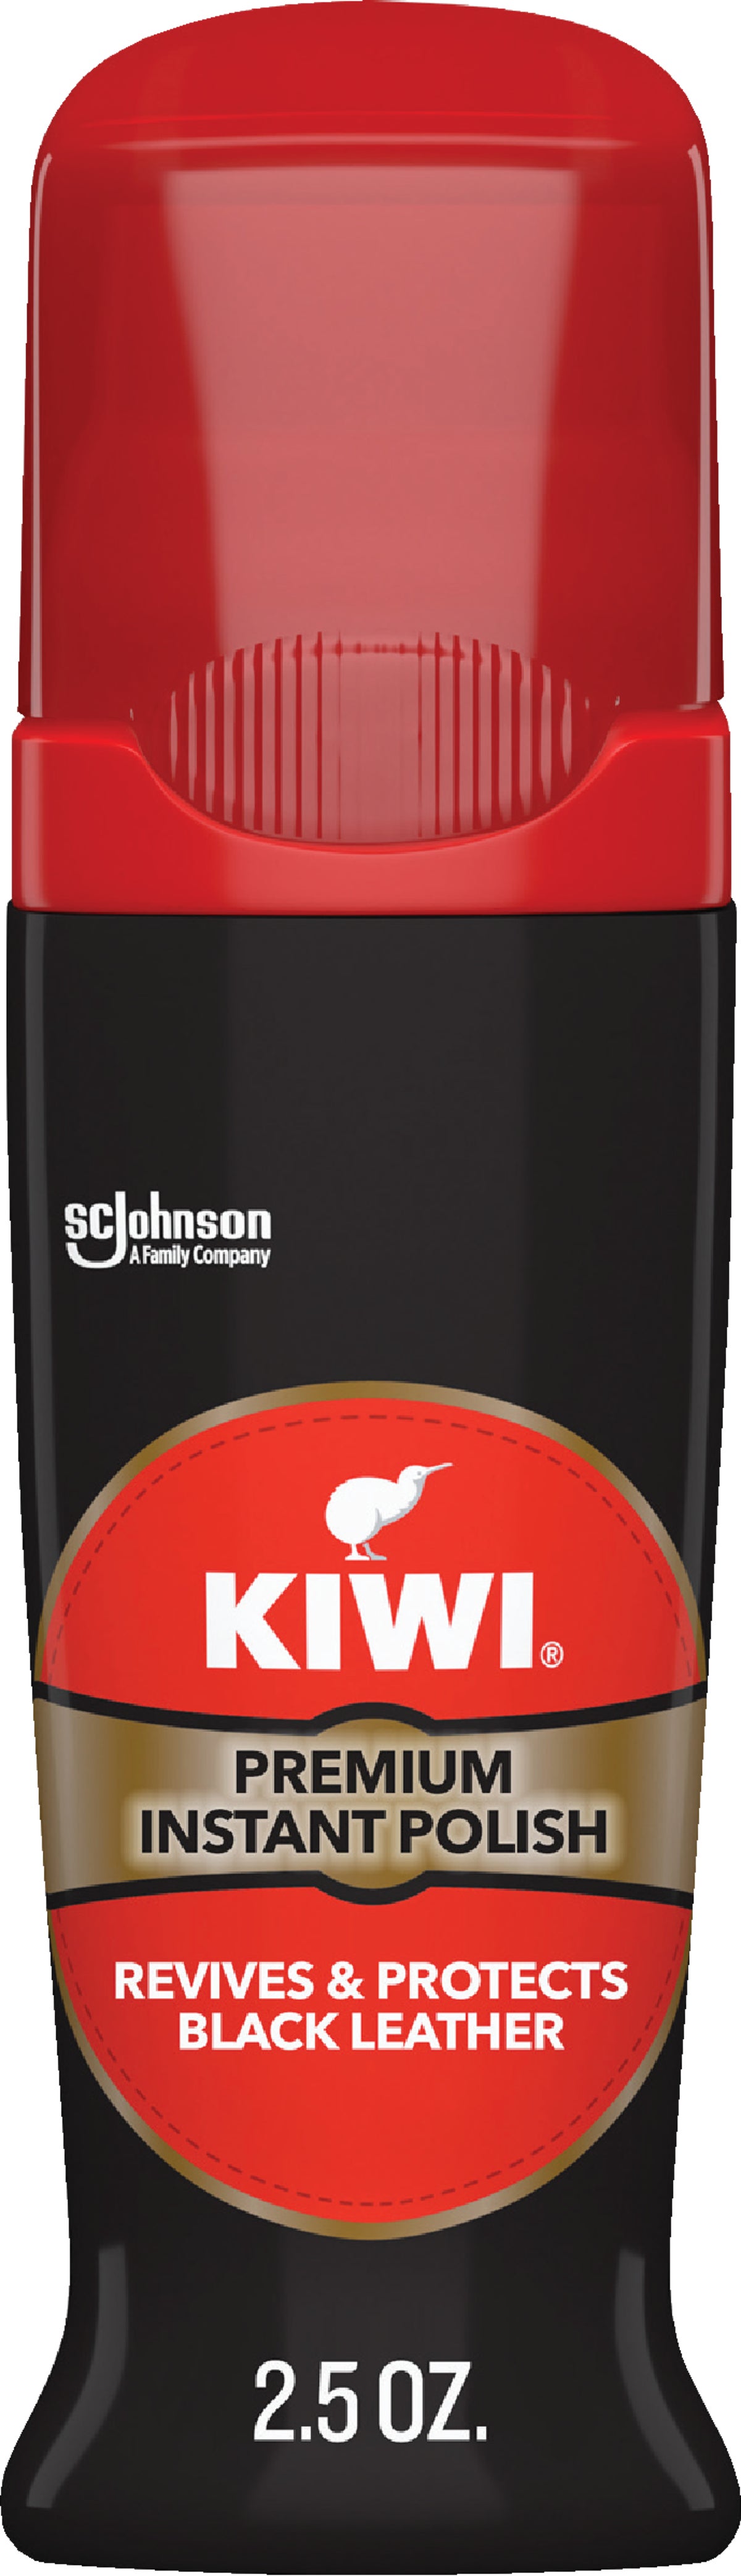 Kiwi Dye Black Leather, 2.5 OZ (Pack of 3)